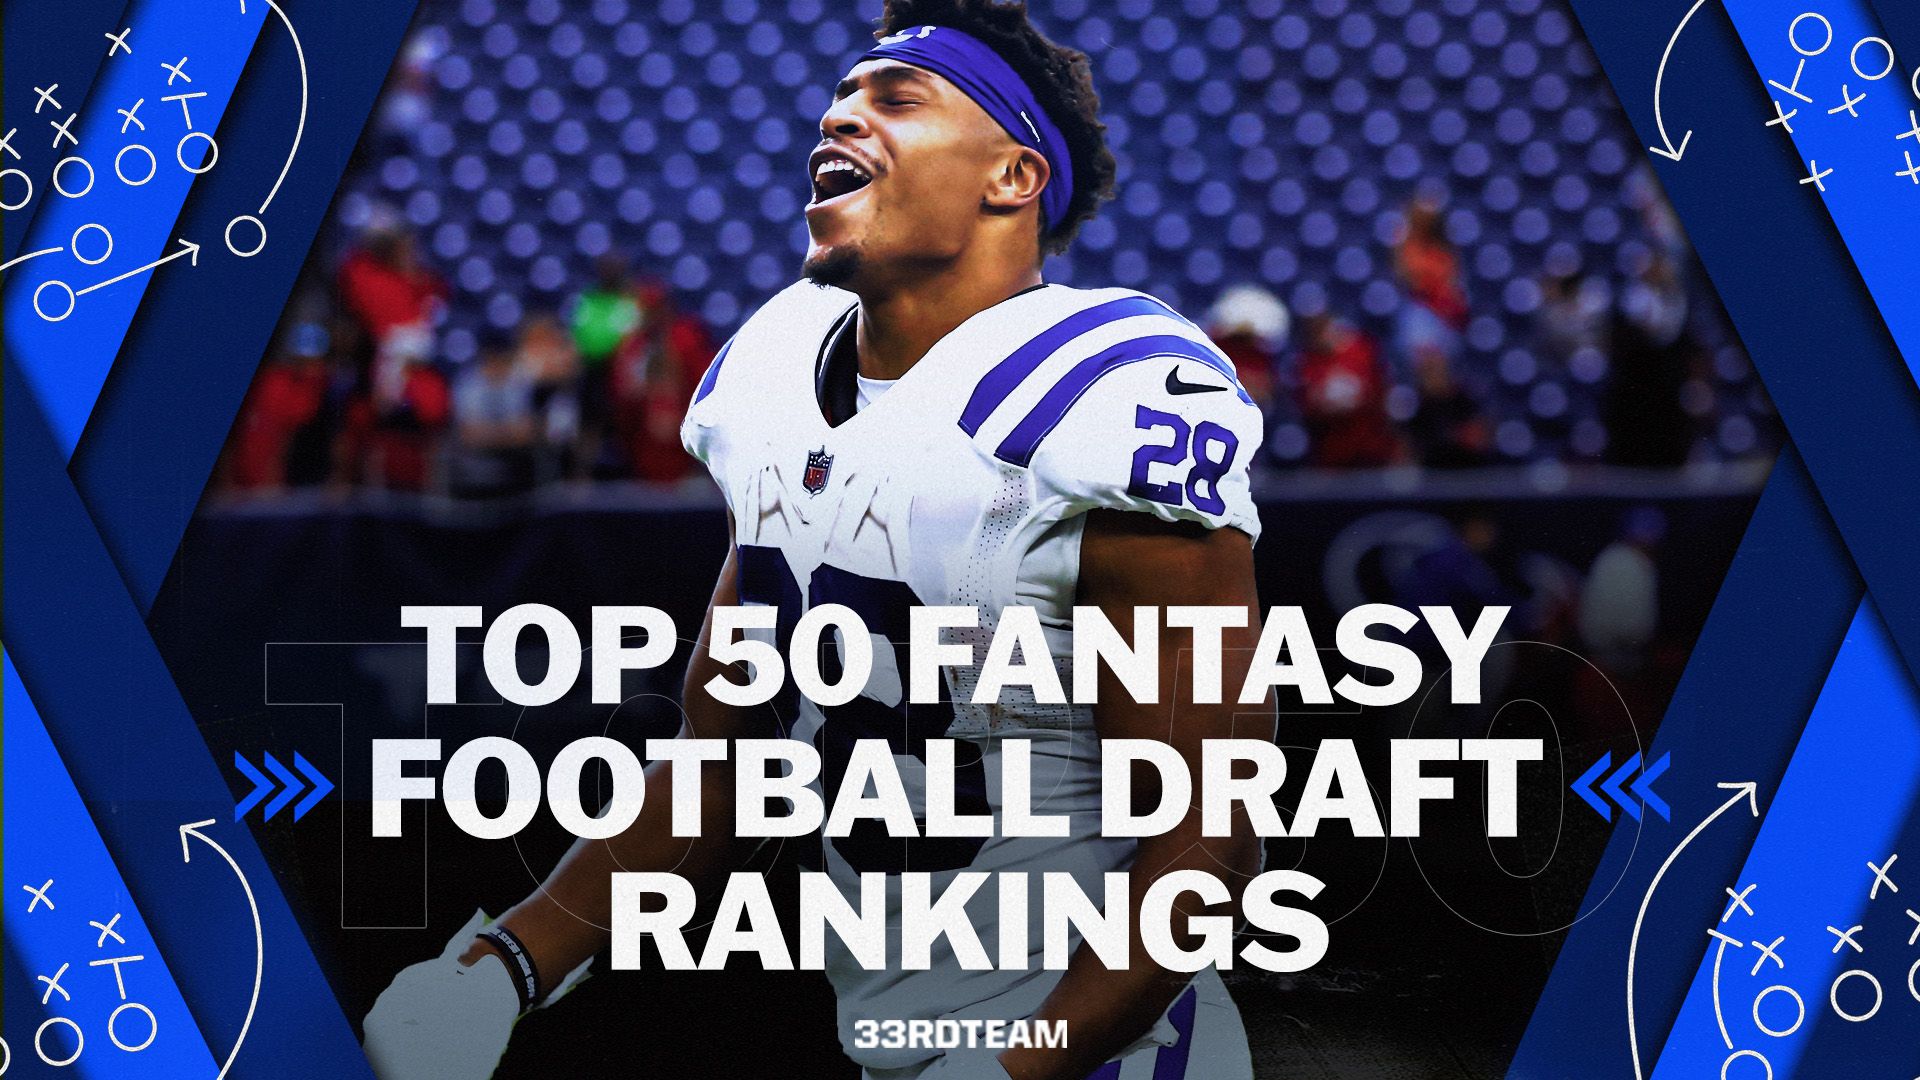 Top 50 Fantasy Football Draft Rankings